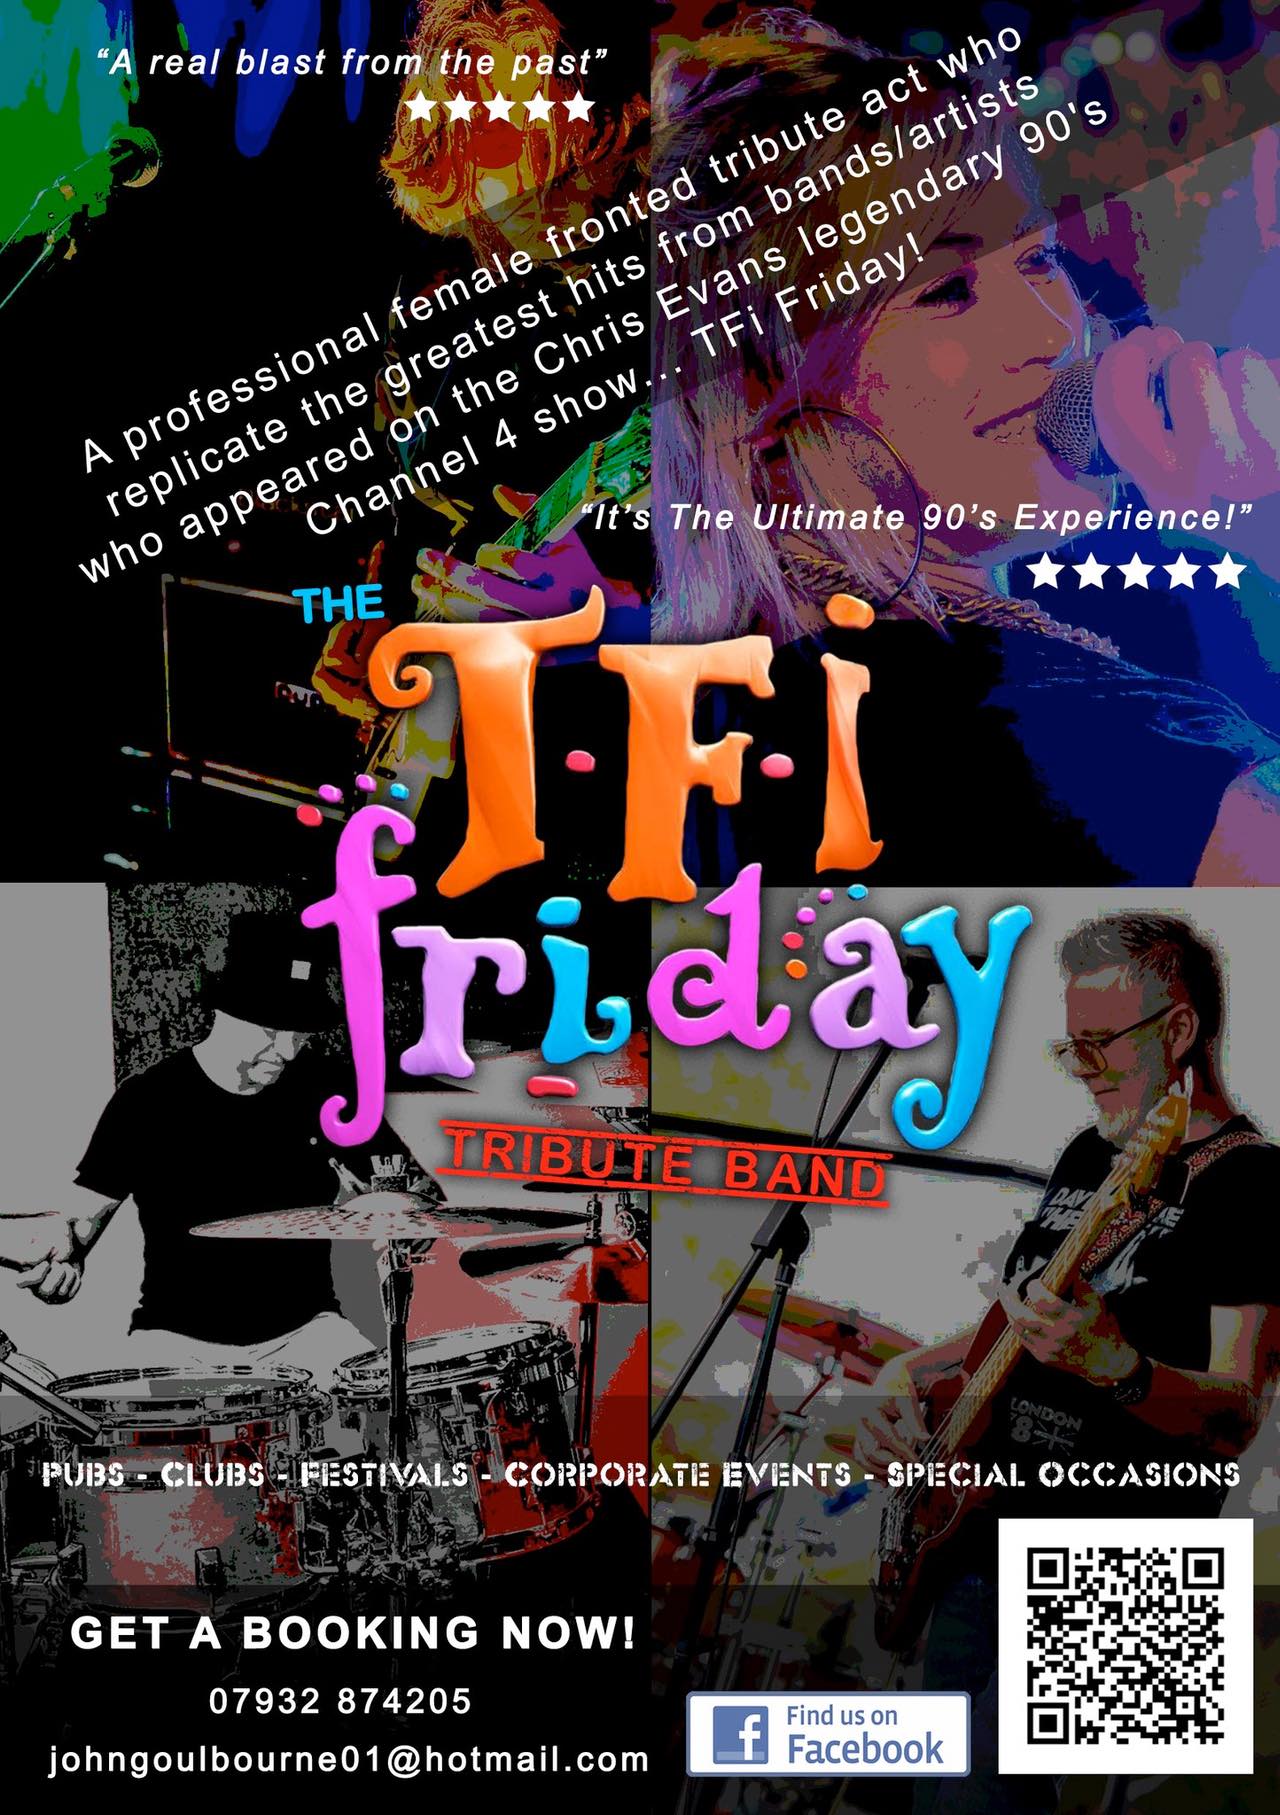 The TFl Friday Tribute Band at Swanage Royal British Legion